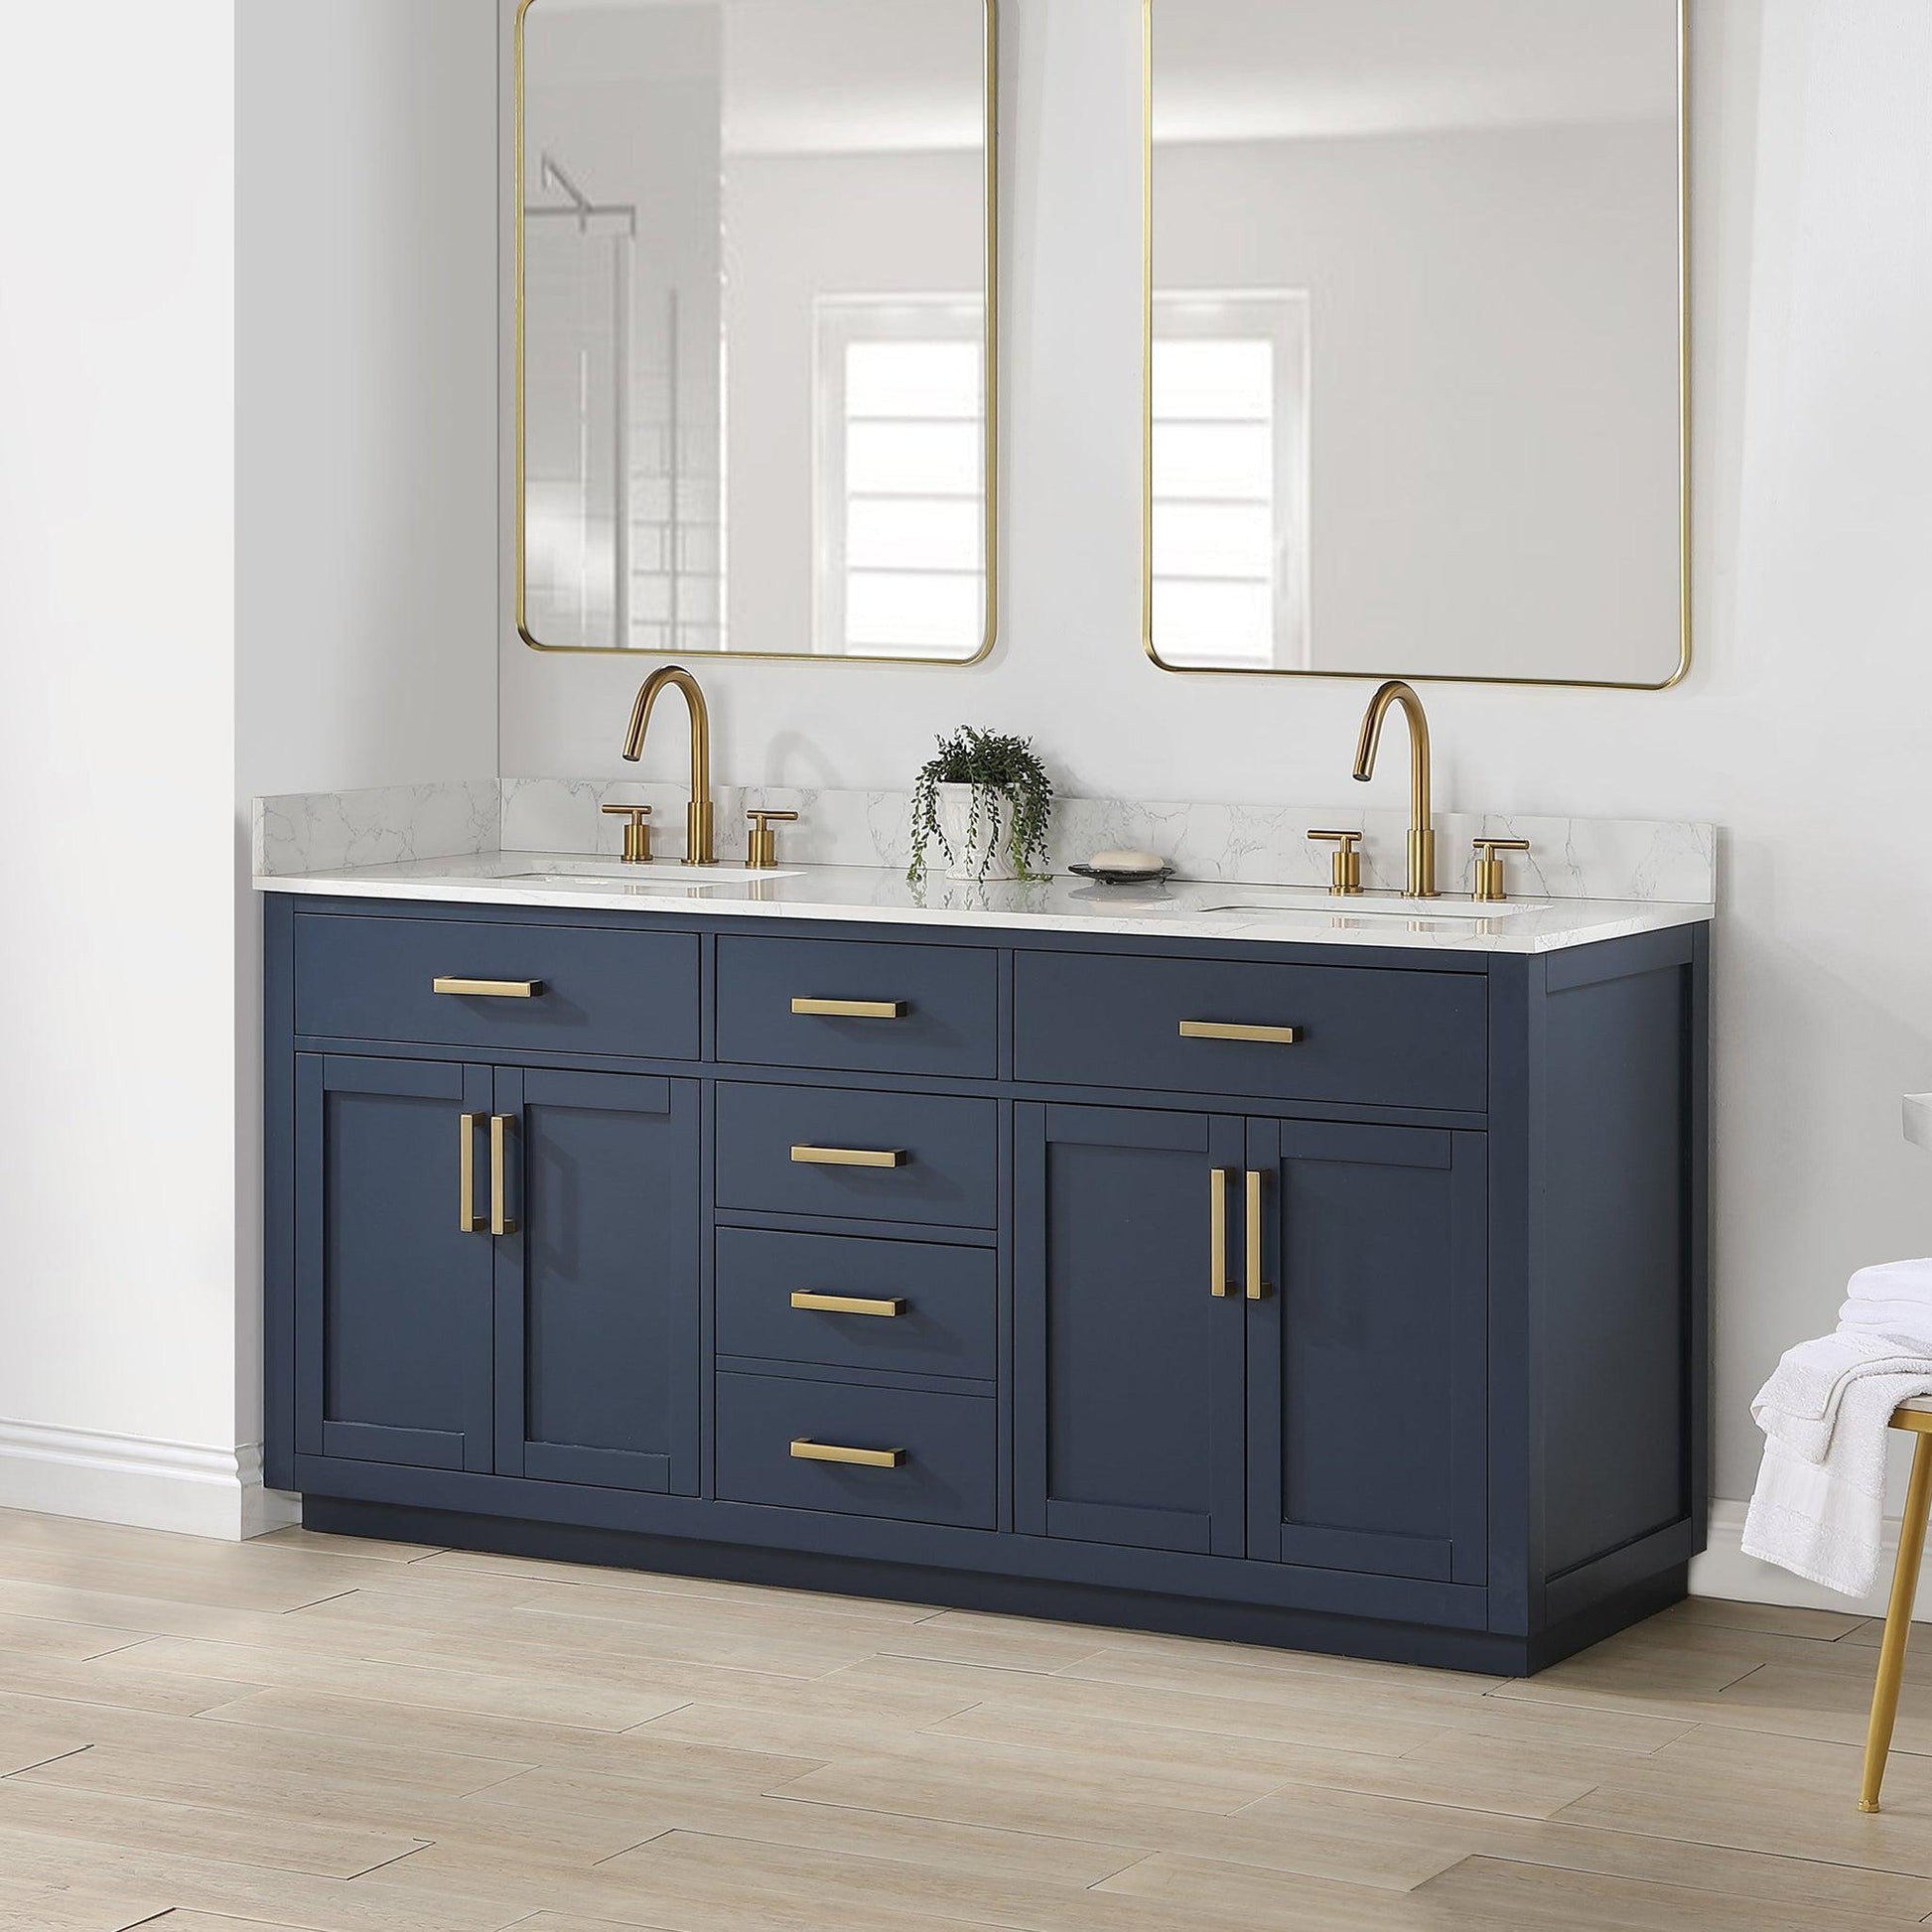 Altair Gavino 72" Royal Blue Freestanding Double Bathroom Vanity Set With Grain White Composite Stone Top, Single Rectangular Undermount Ceramic Sink, Overflow, Sidesplash, and Backsplash